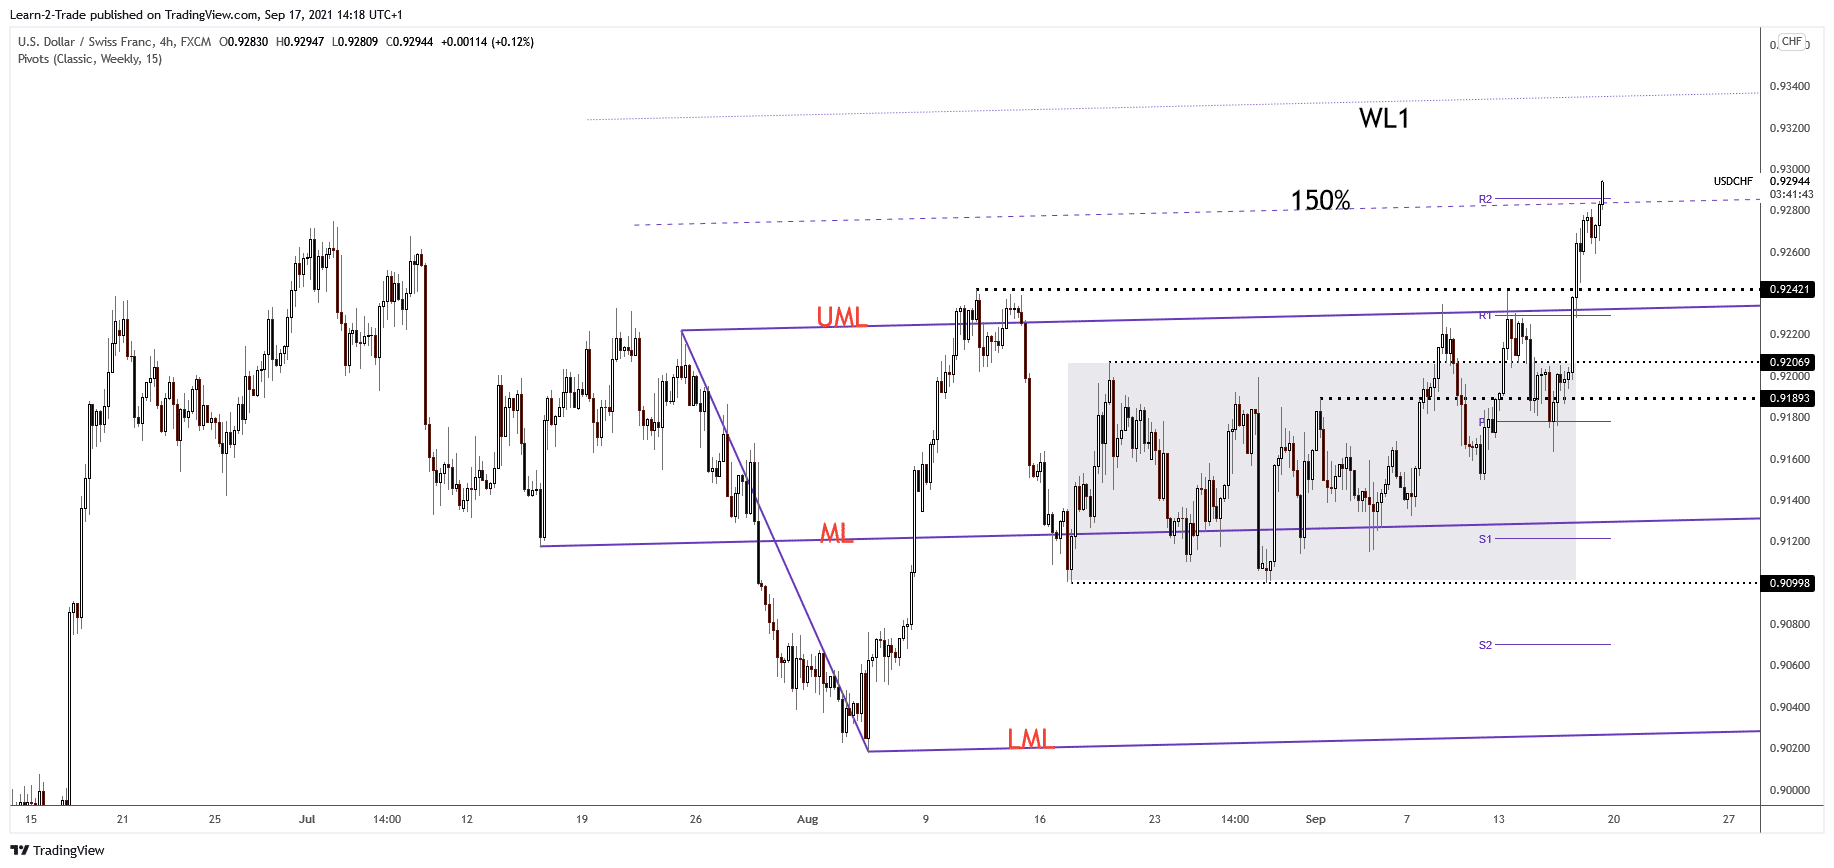 USD/CHF 4-hour price chart